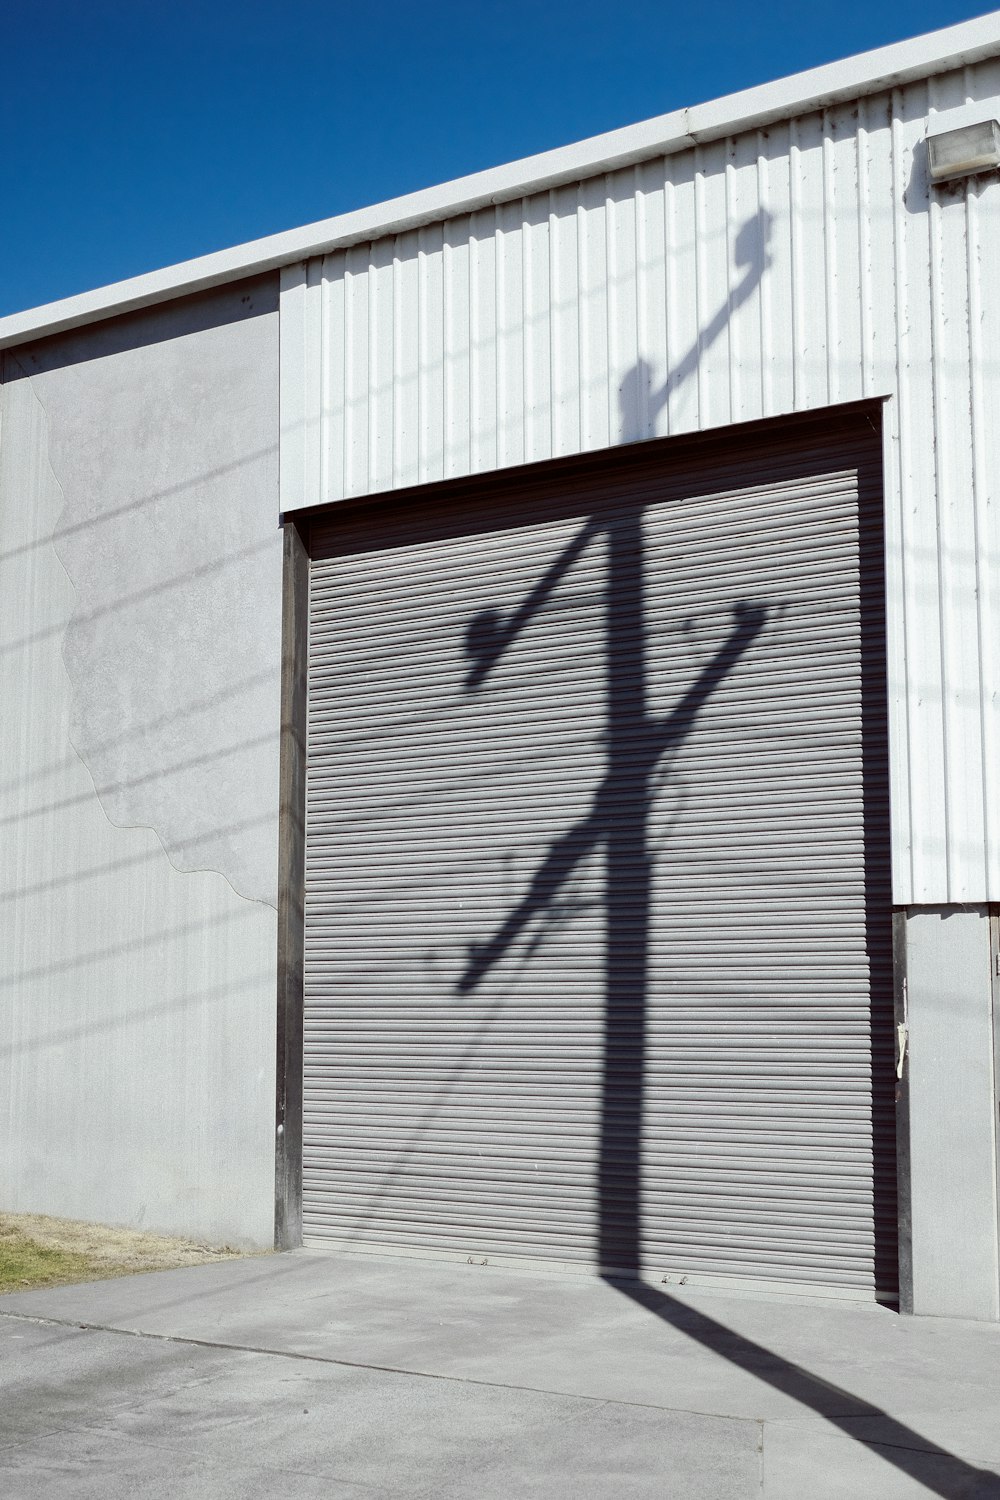 the shadow of a street light on a garage door